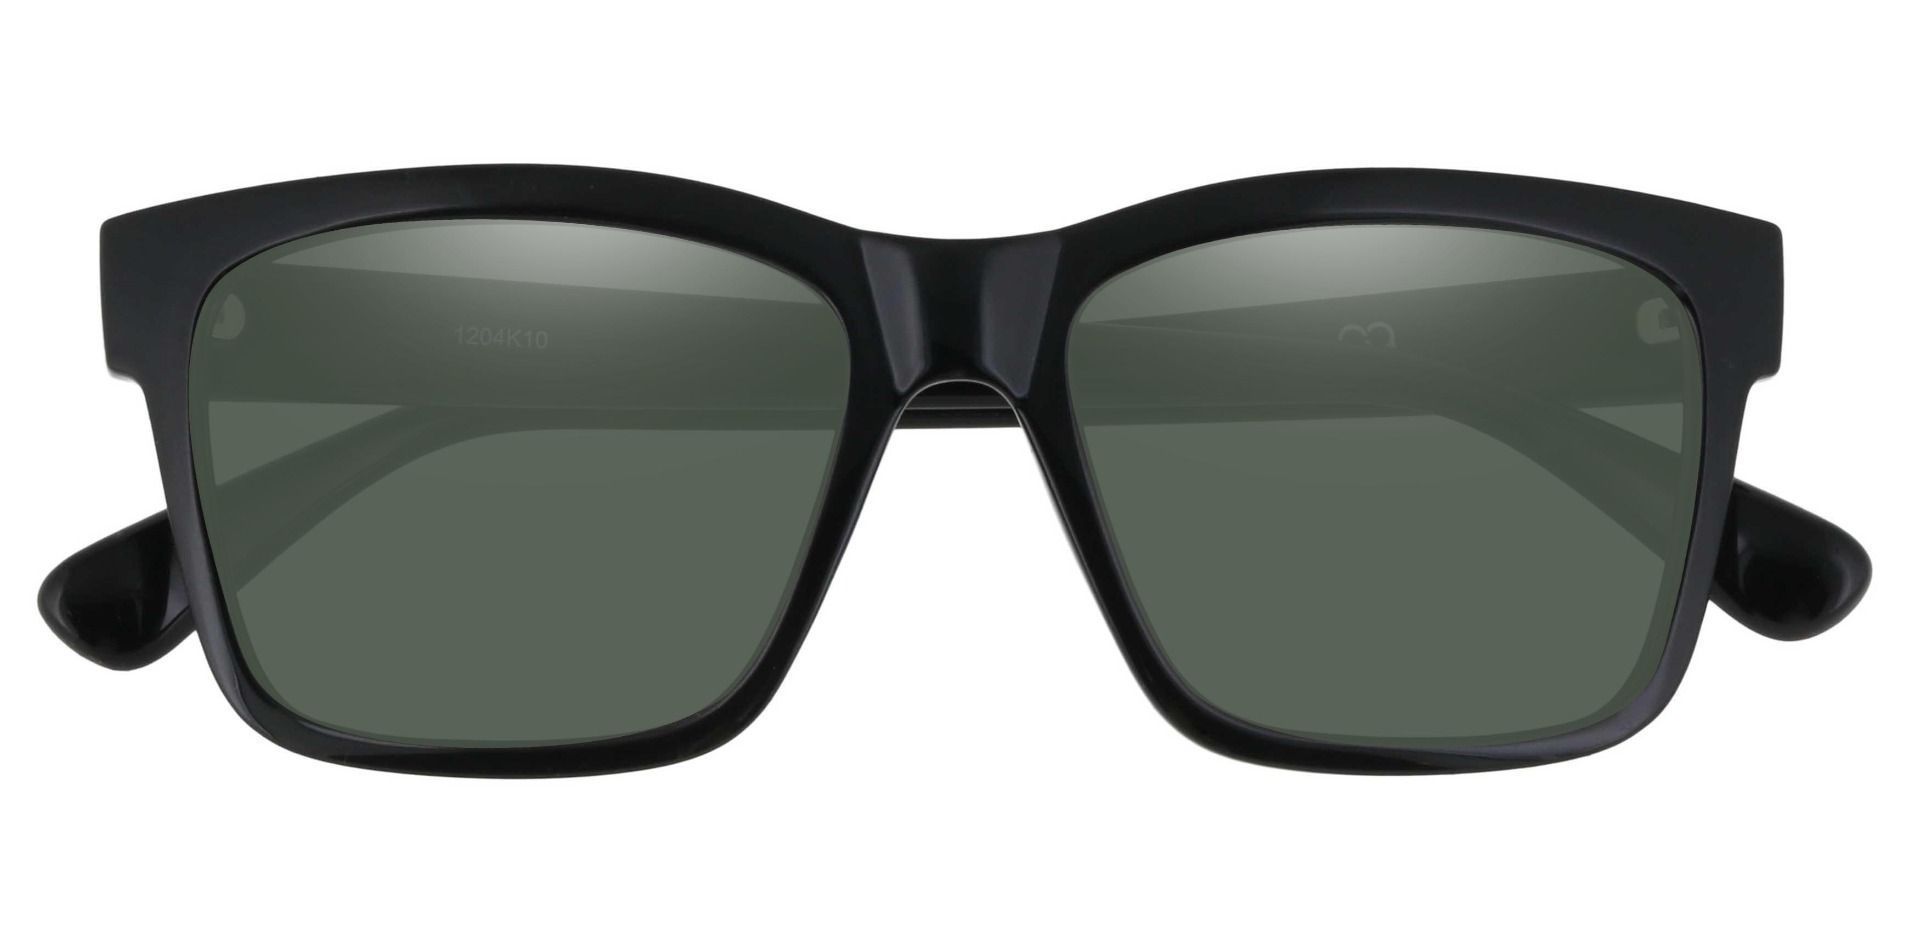 Brinley Square Prescription Sunglasses - Black Frame With Green Lenses